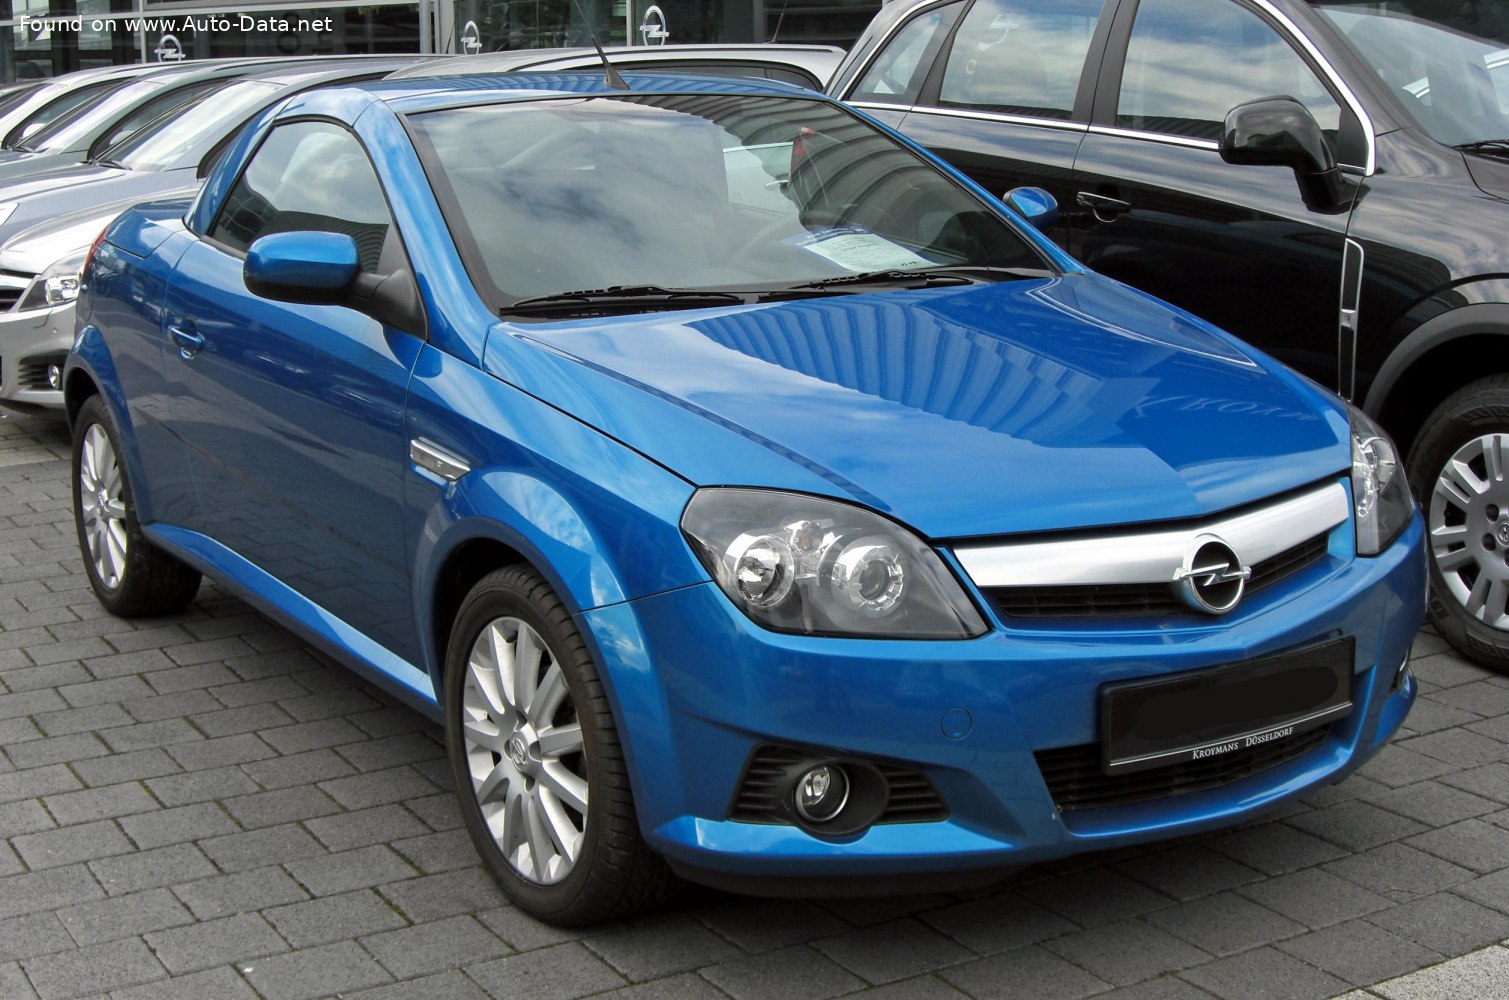 Opel - Tigra EZ 05/2005